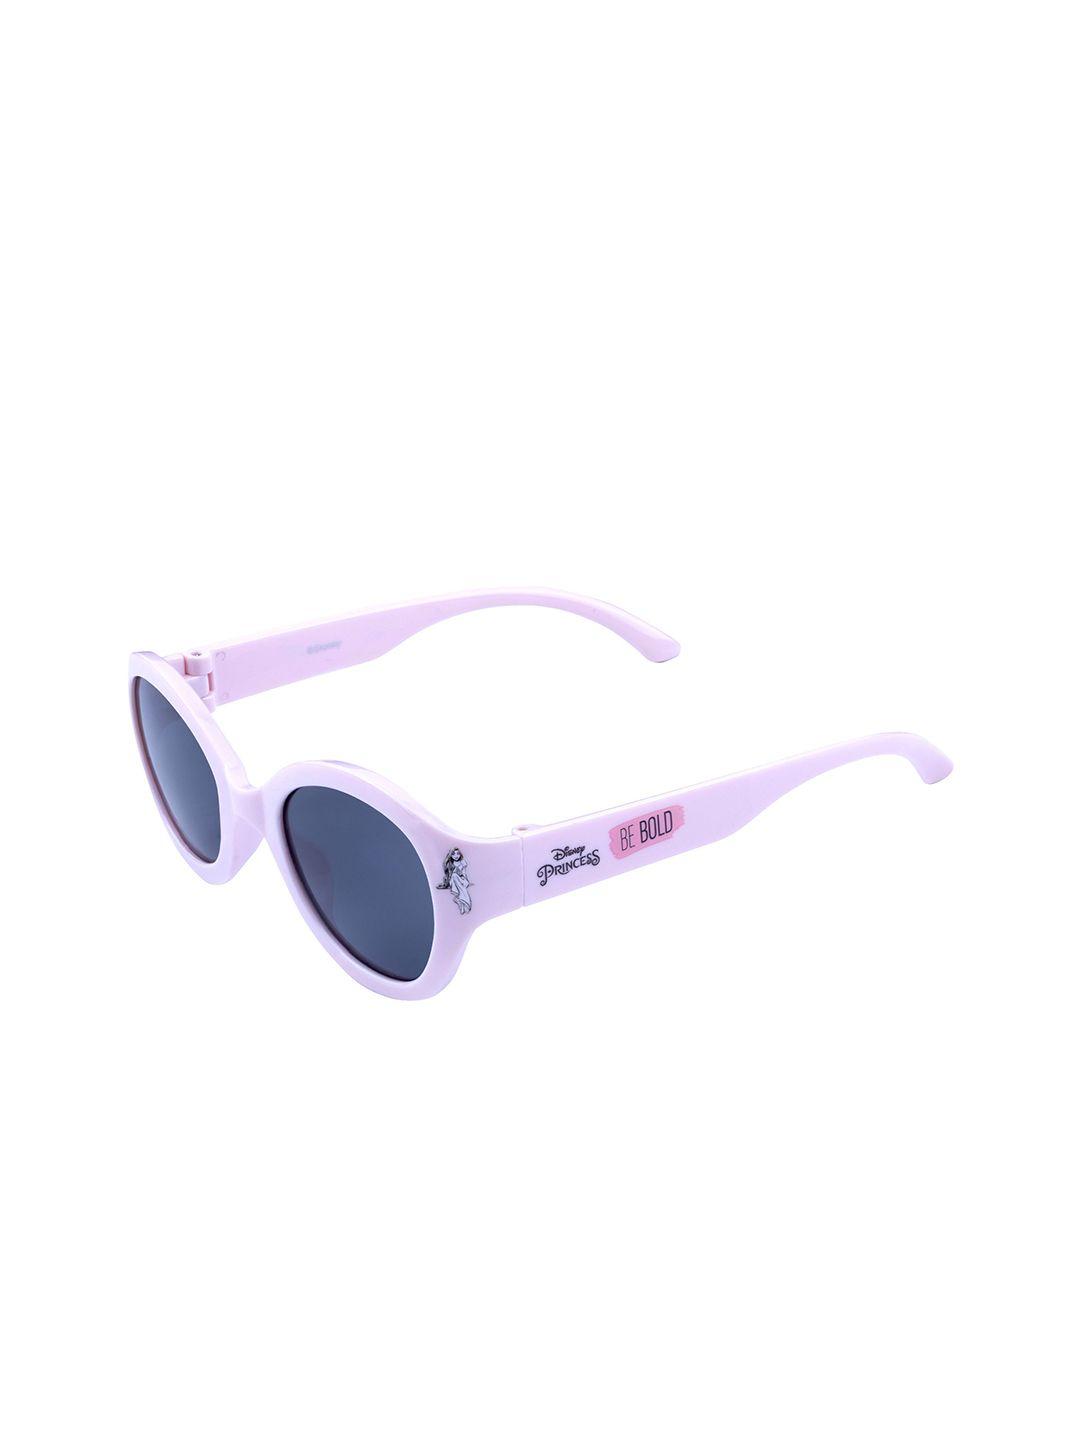 Disney Girls Blue Lens & Pink Princess Printed Oval Sunglasses TRHA15211